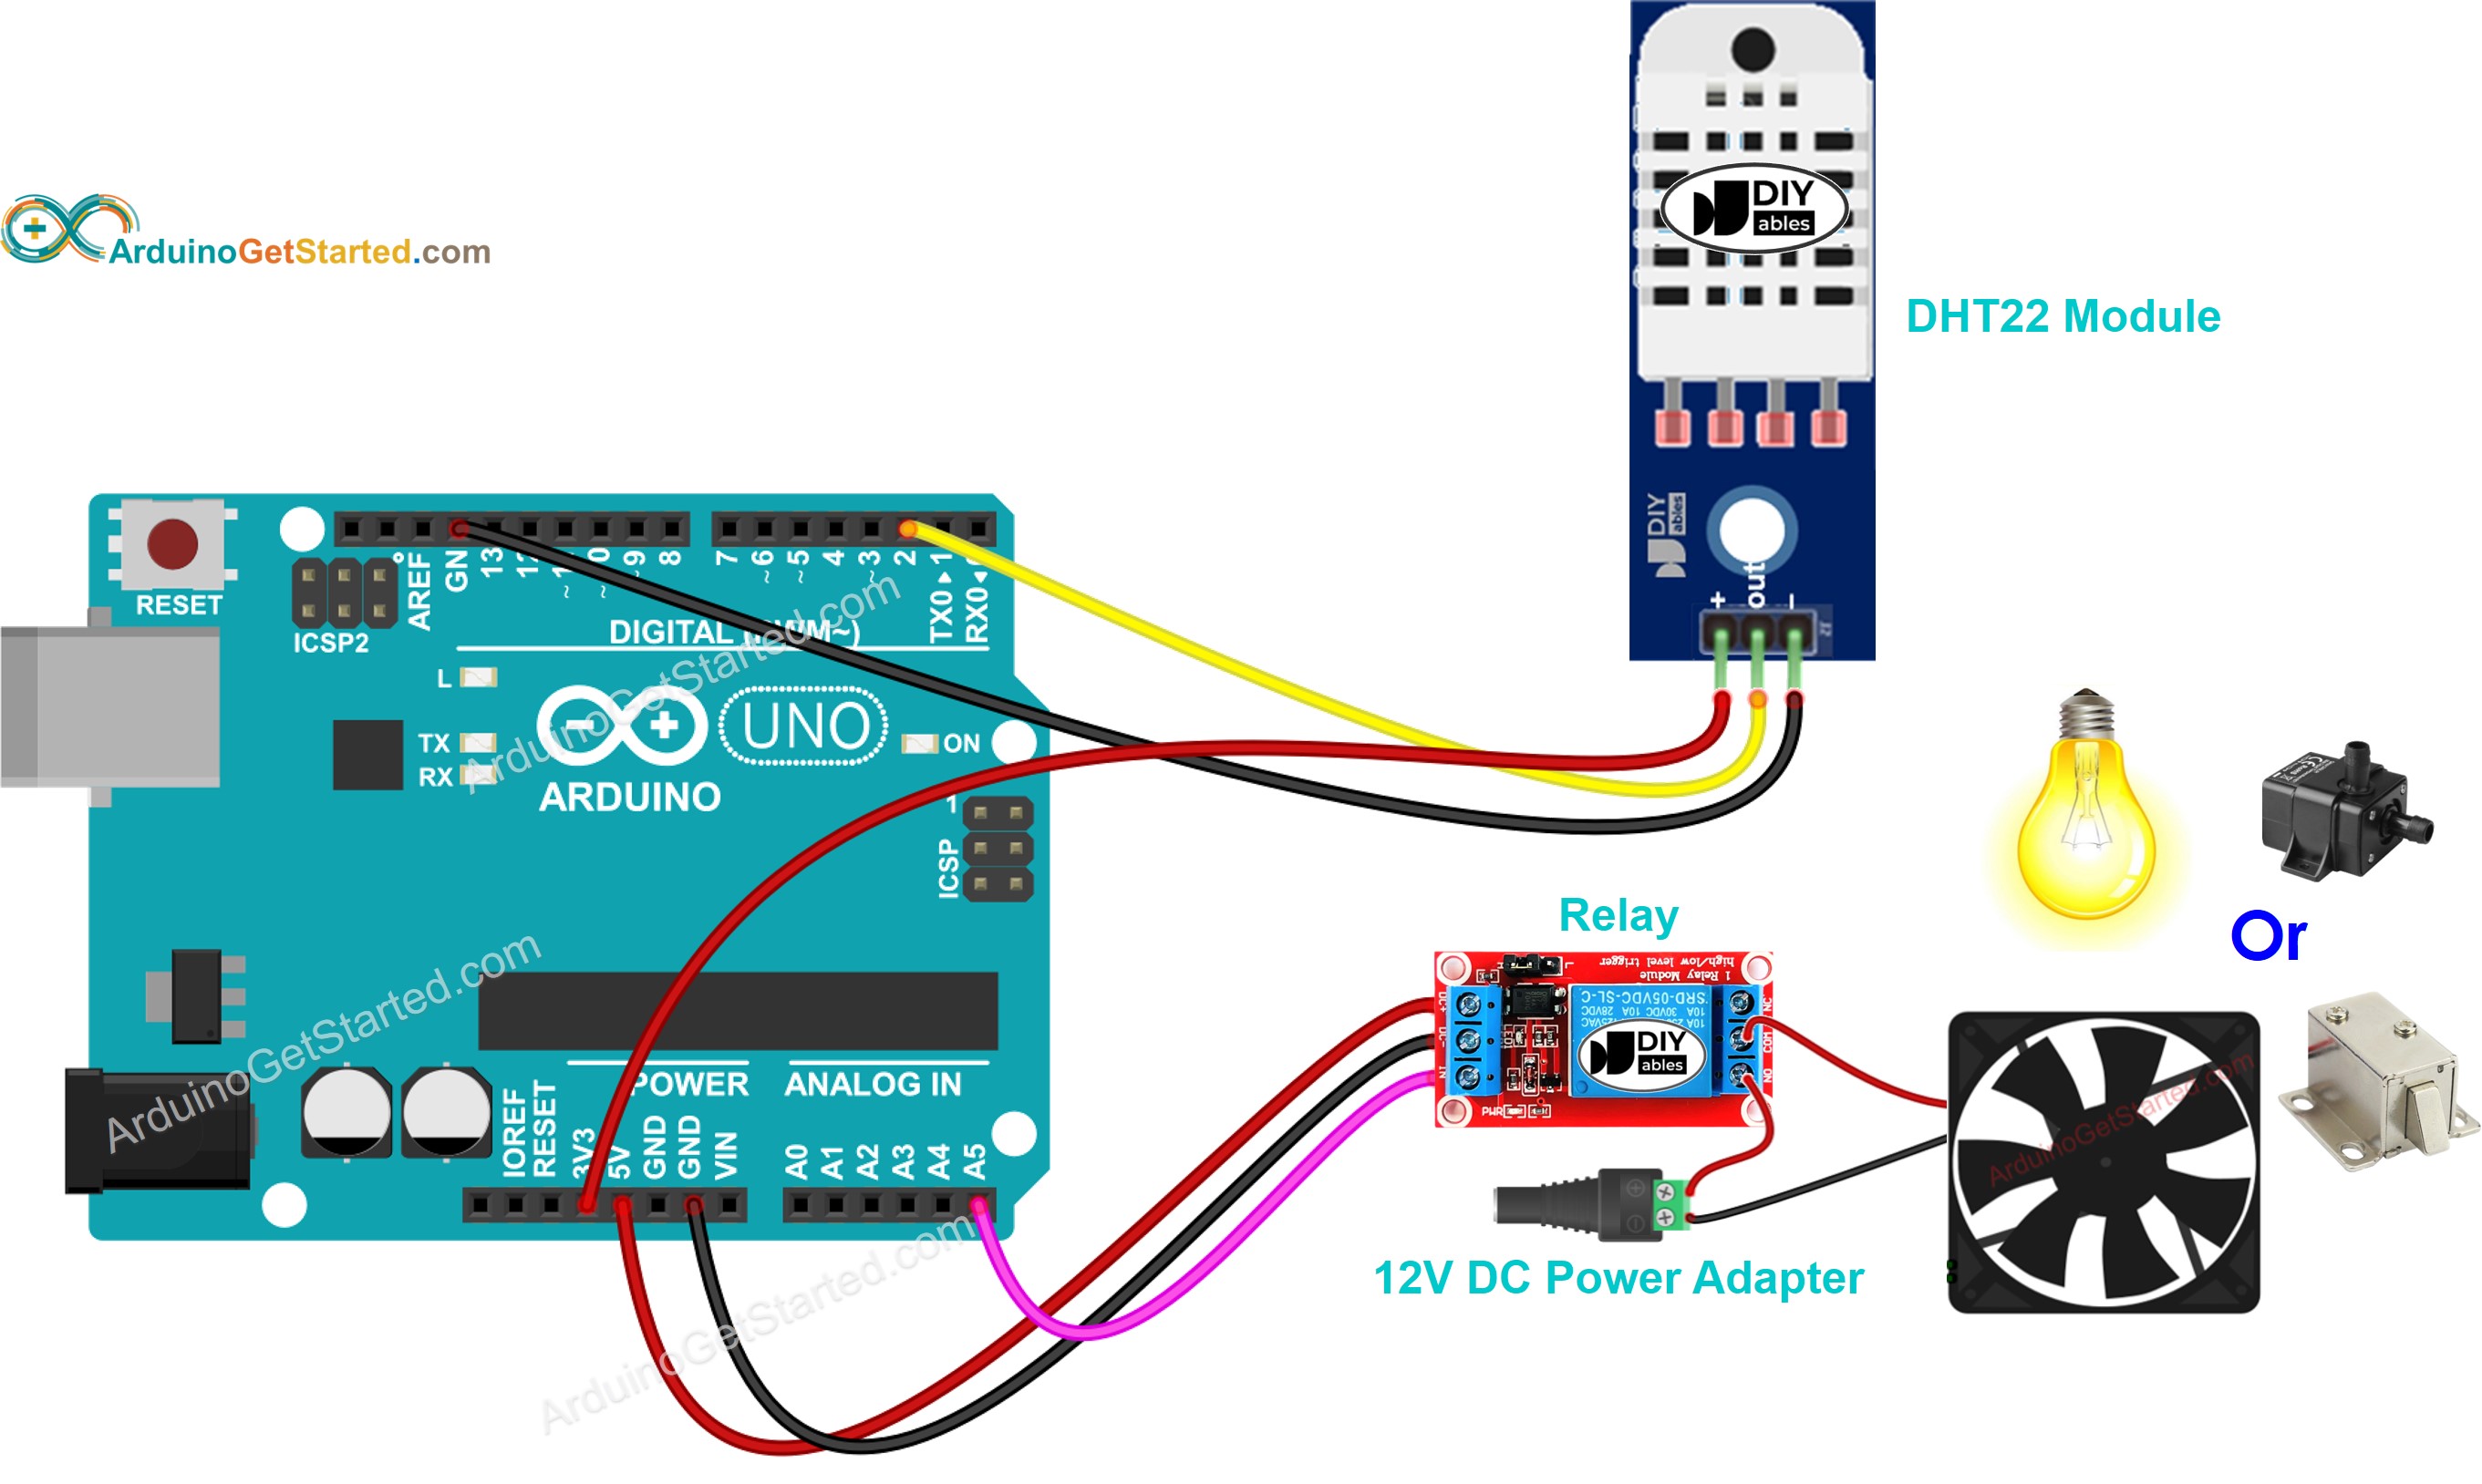 https://arduinogetstarted.com/images/tutorial/arduino-dht22-relay-wiring-diagram.jpg